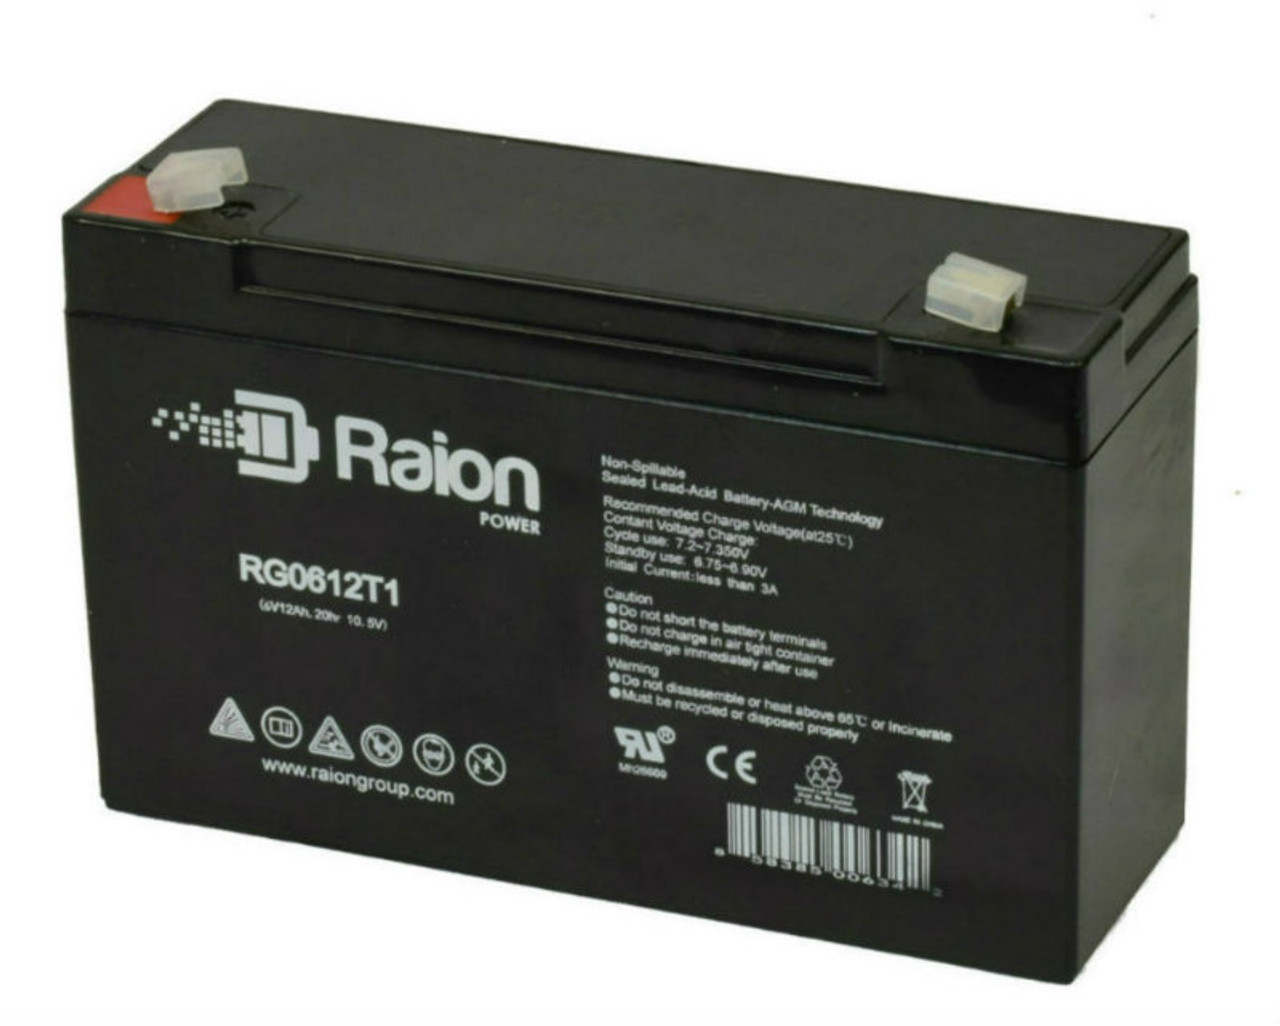 Raion Power RG06120T1 6V 12Ah Replacement UPS Battery Cartridge for Tripp Lite RBC52